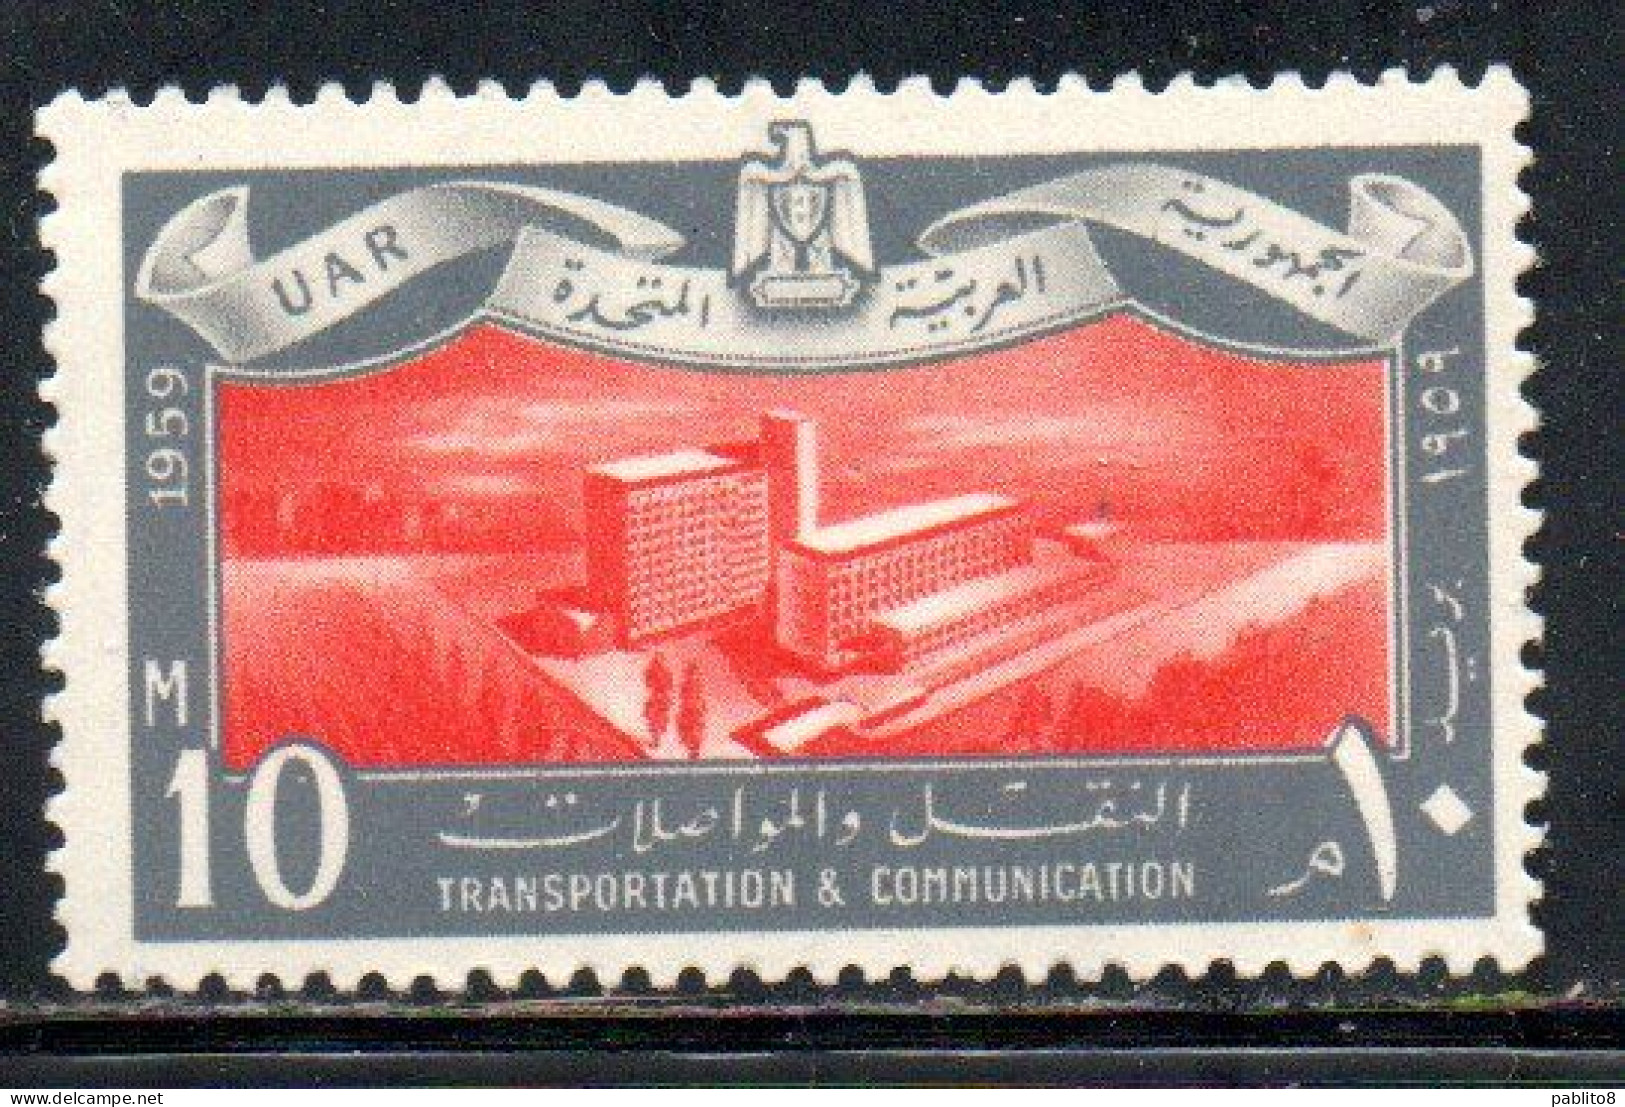 UAR EGYPT EGITTO 1959 TRANSPORTATION AND TELECOMMUNICATION STAMP PRINTING BUILDING HELIOPOLIS 10m MNH - Nuovi